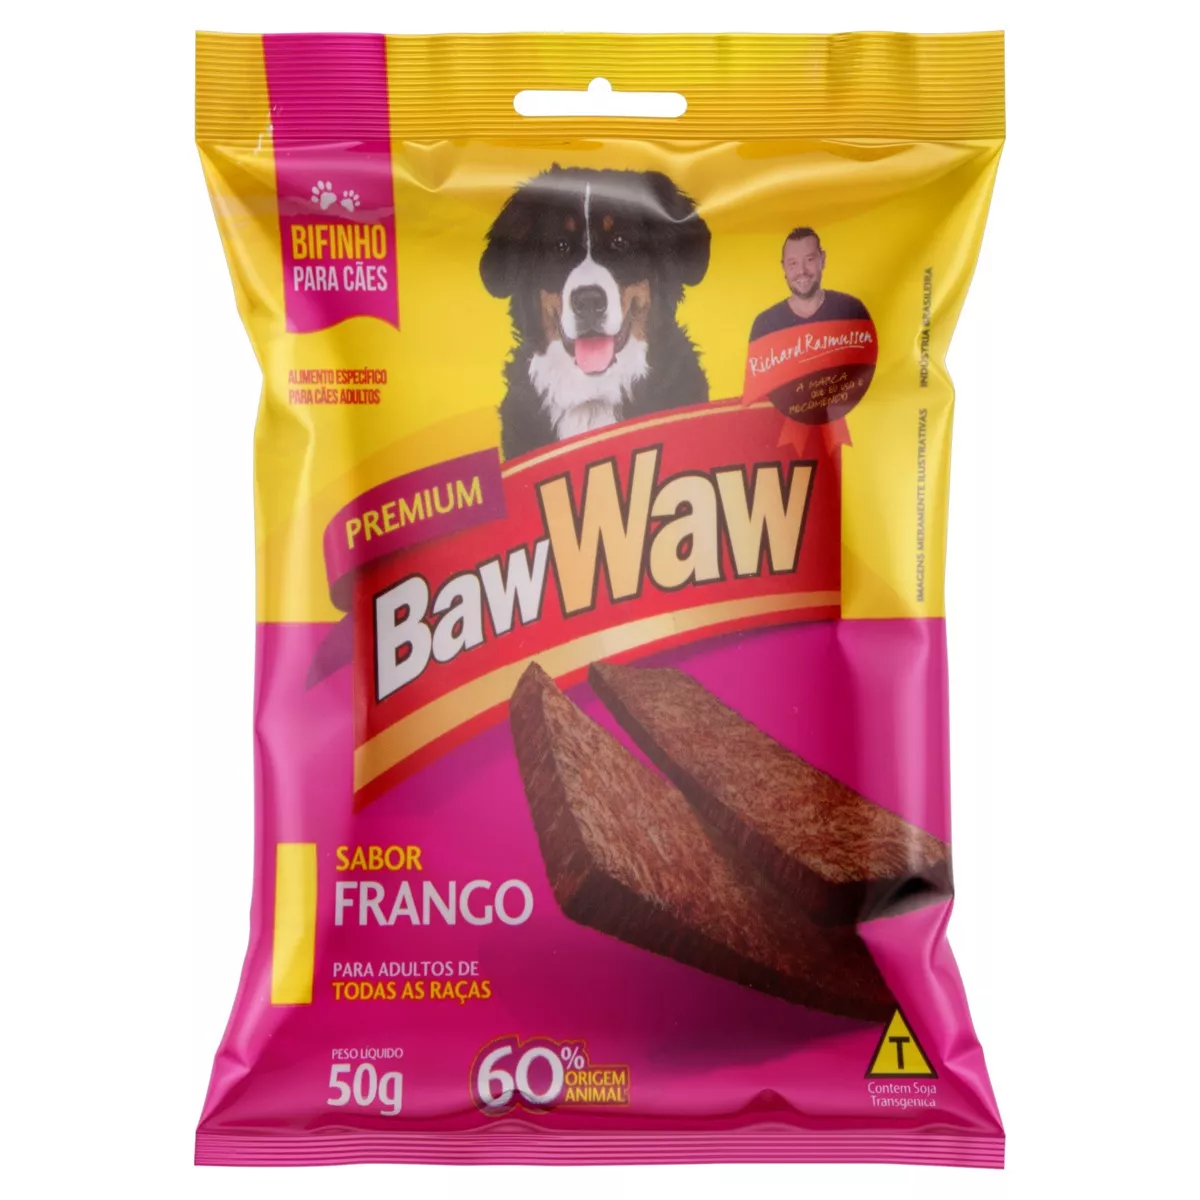 Bifinho Para Cães Adultos Frango Baw Waw Premium Pacote 50g